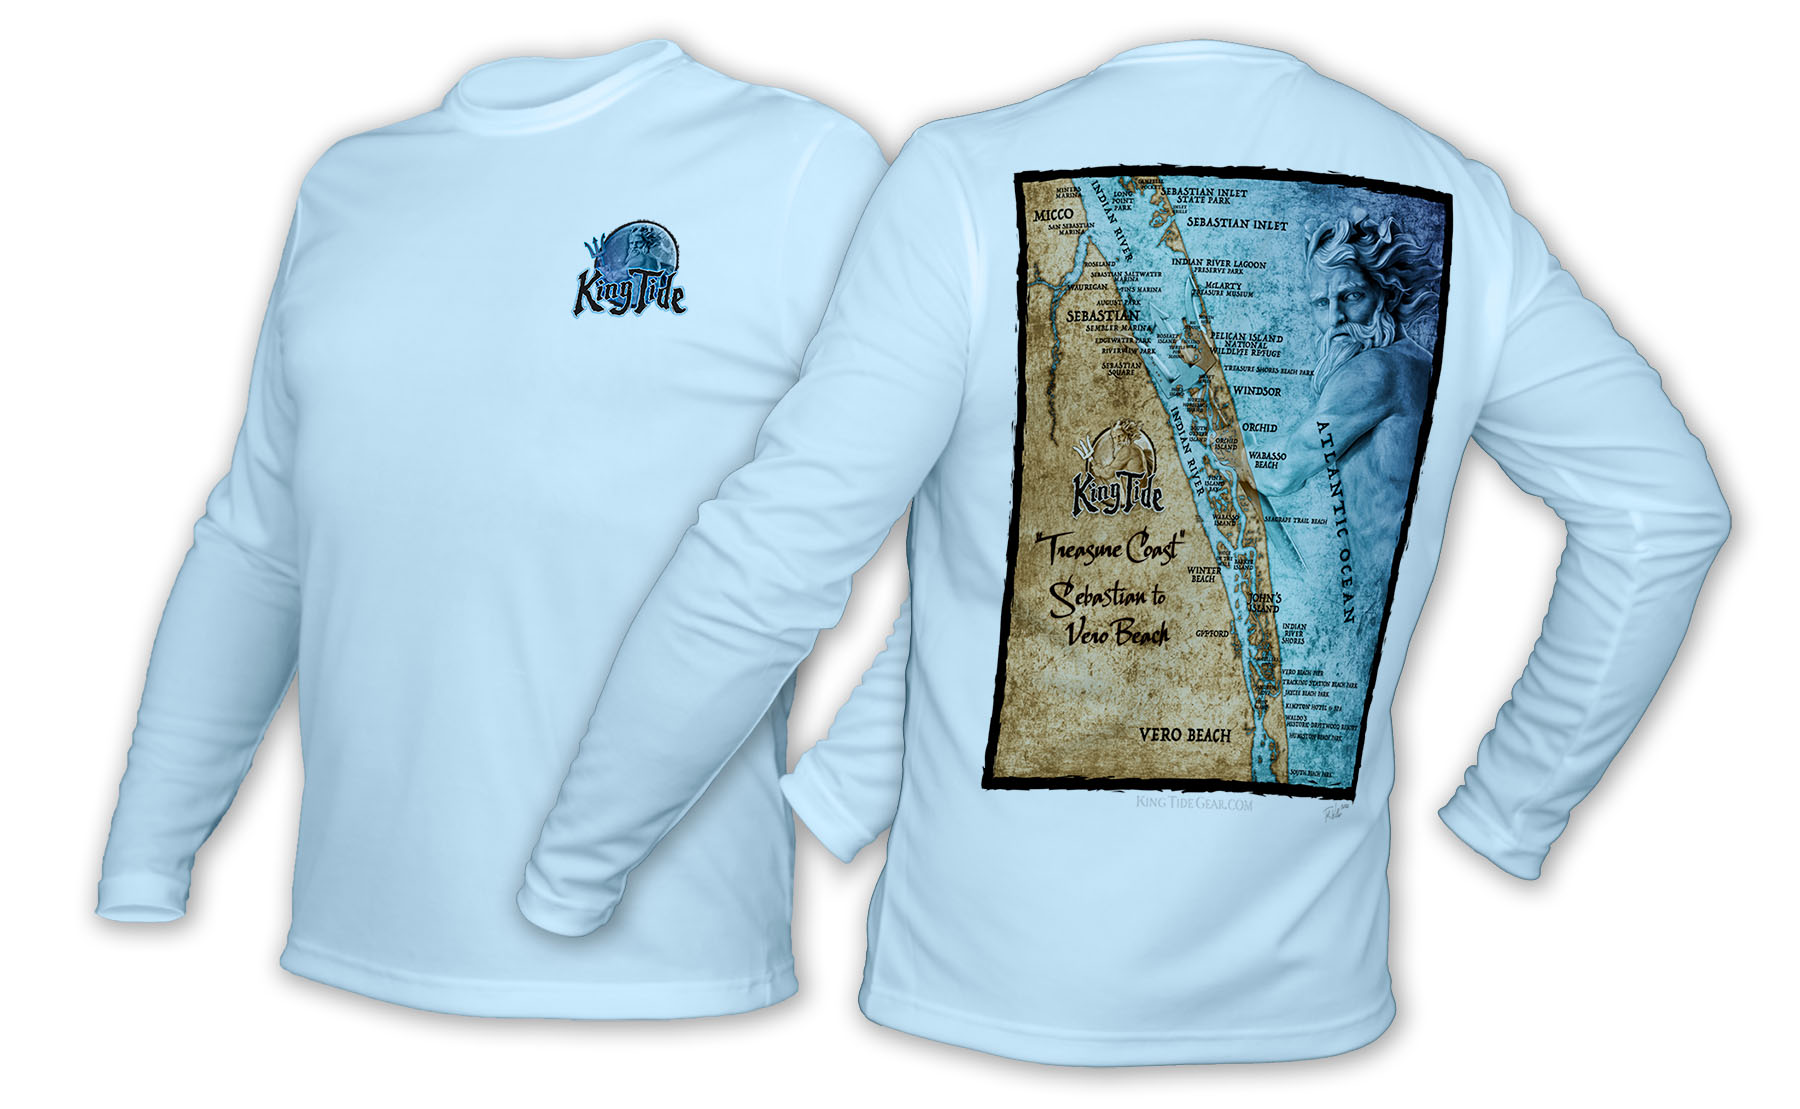 Vero - Sebastian, FL / King Tide Blue Moon Chart Shirt